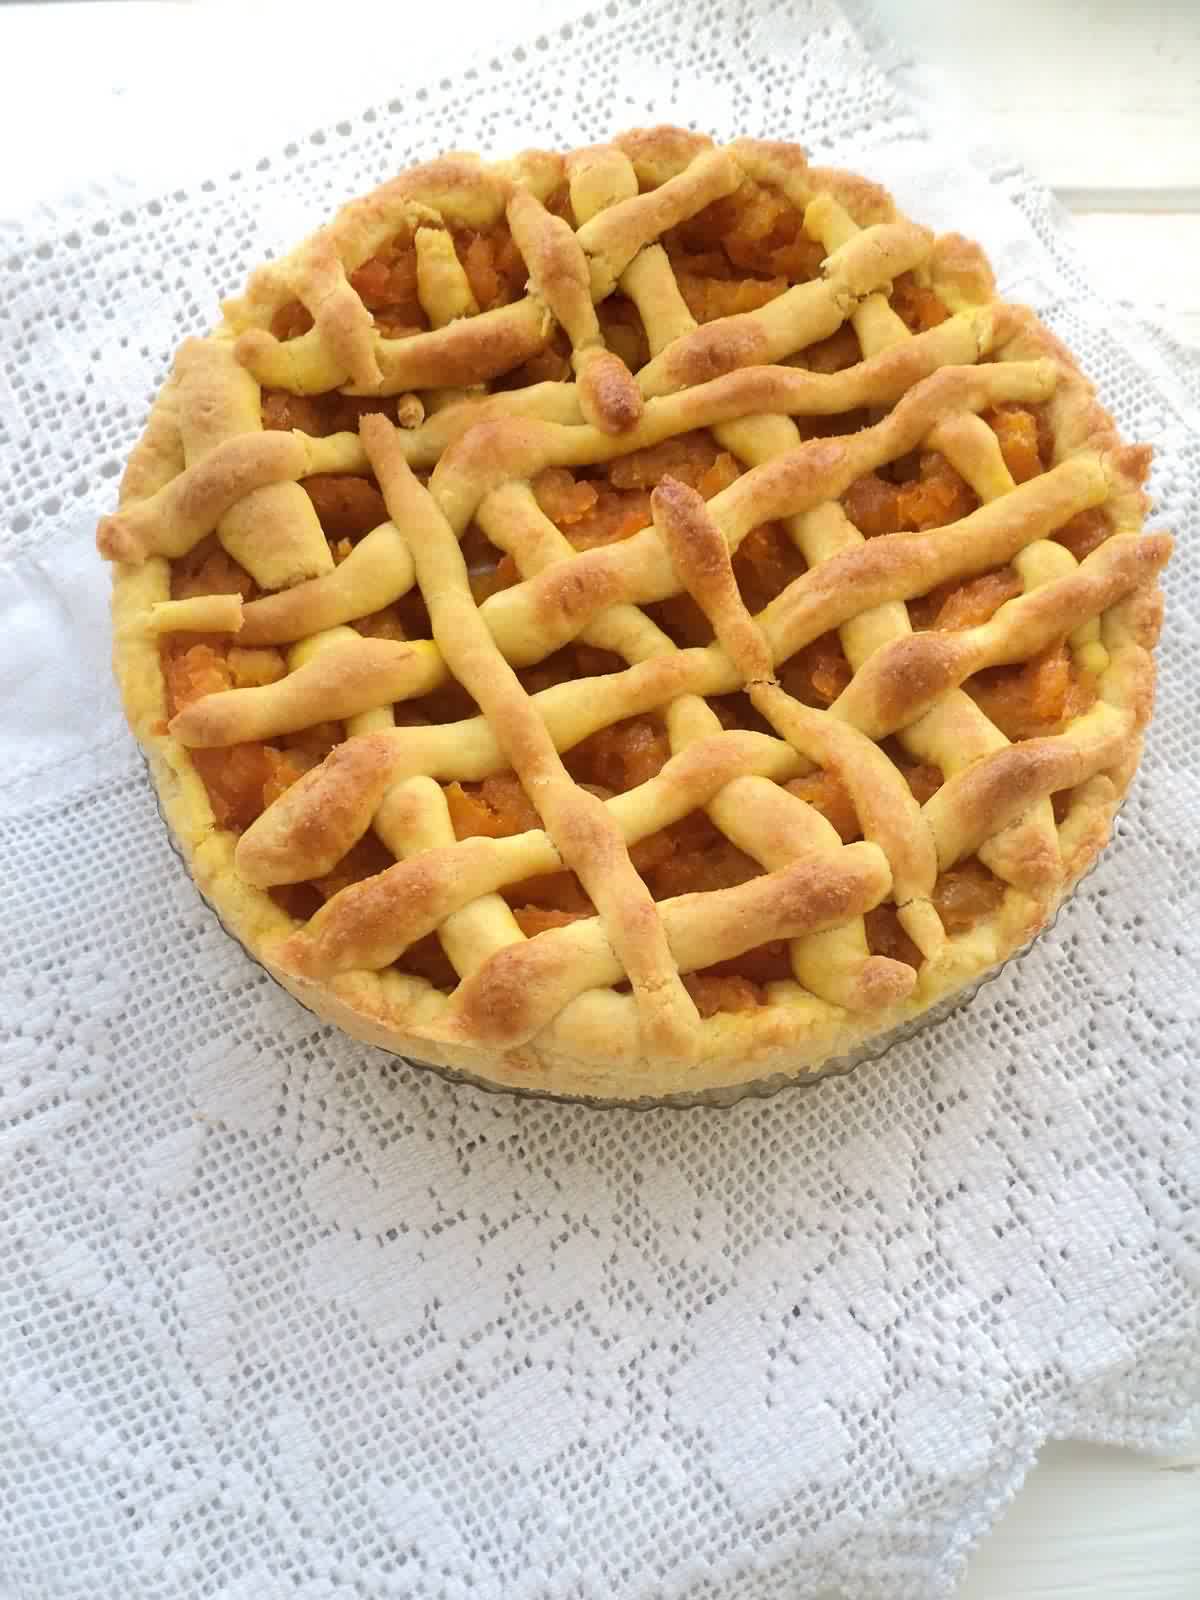 Песочное тесто для яблочного пирога